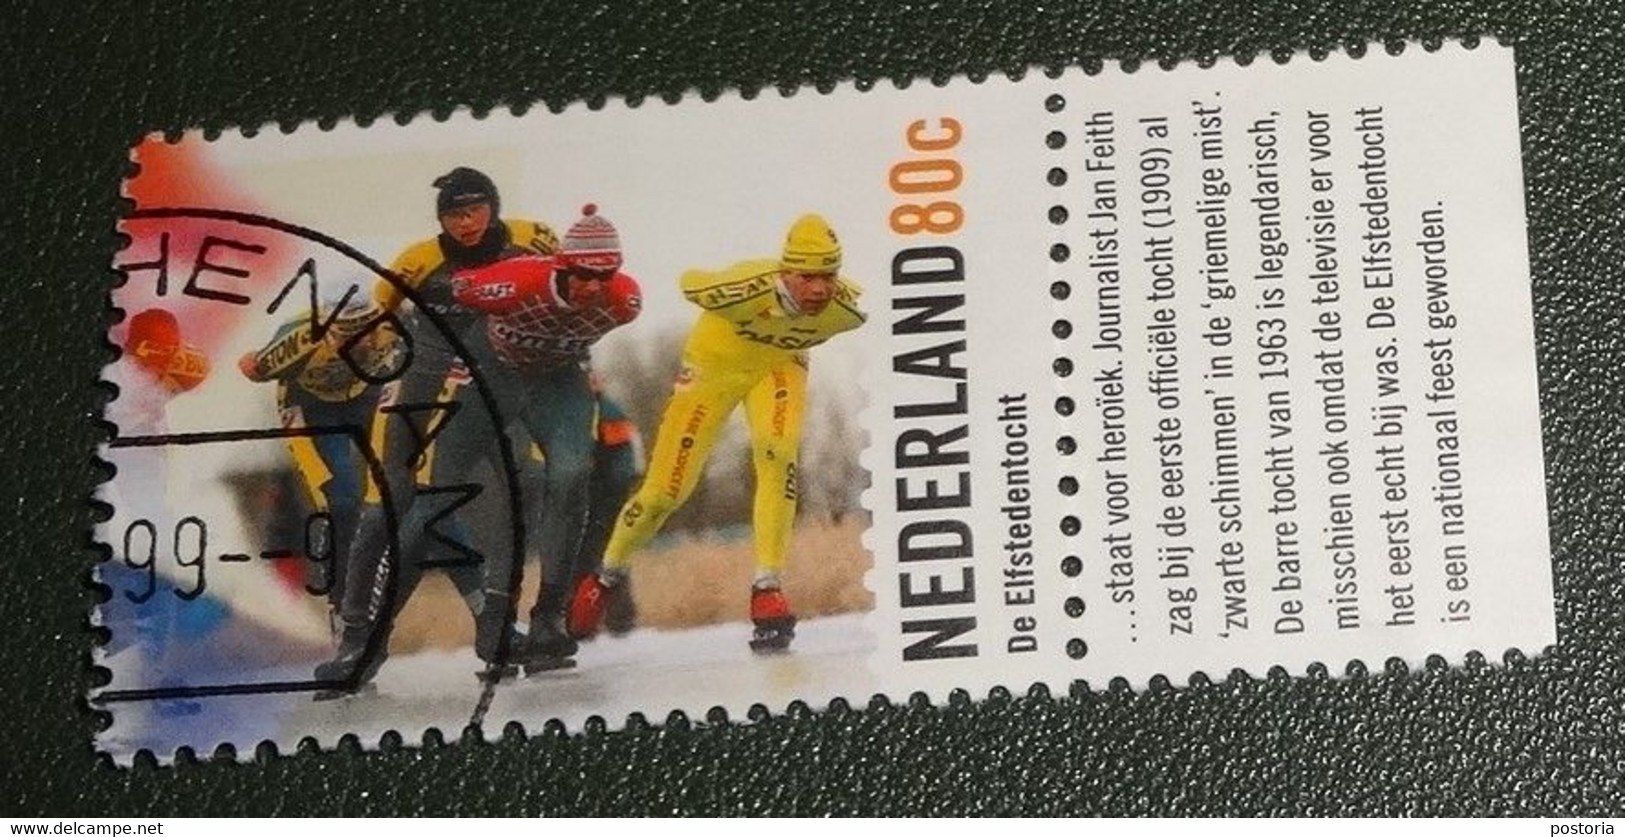 Nederland - NVPH - 1851 - 1999 - Gebruikt - Cancelled - Hoogtepunten 20e Eeuw - Elfstedentocht - Tab - Used Stamps